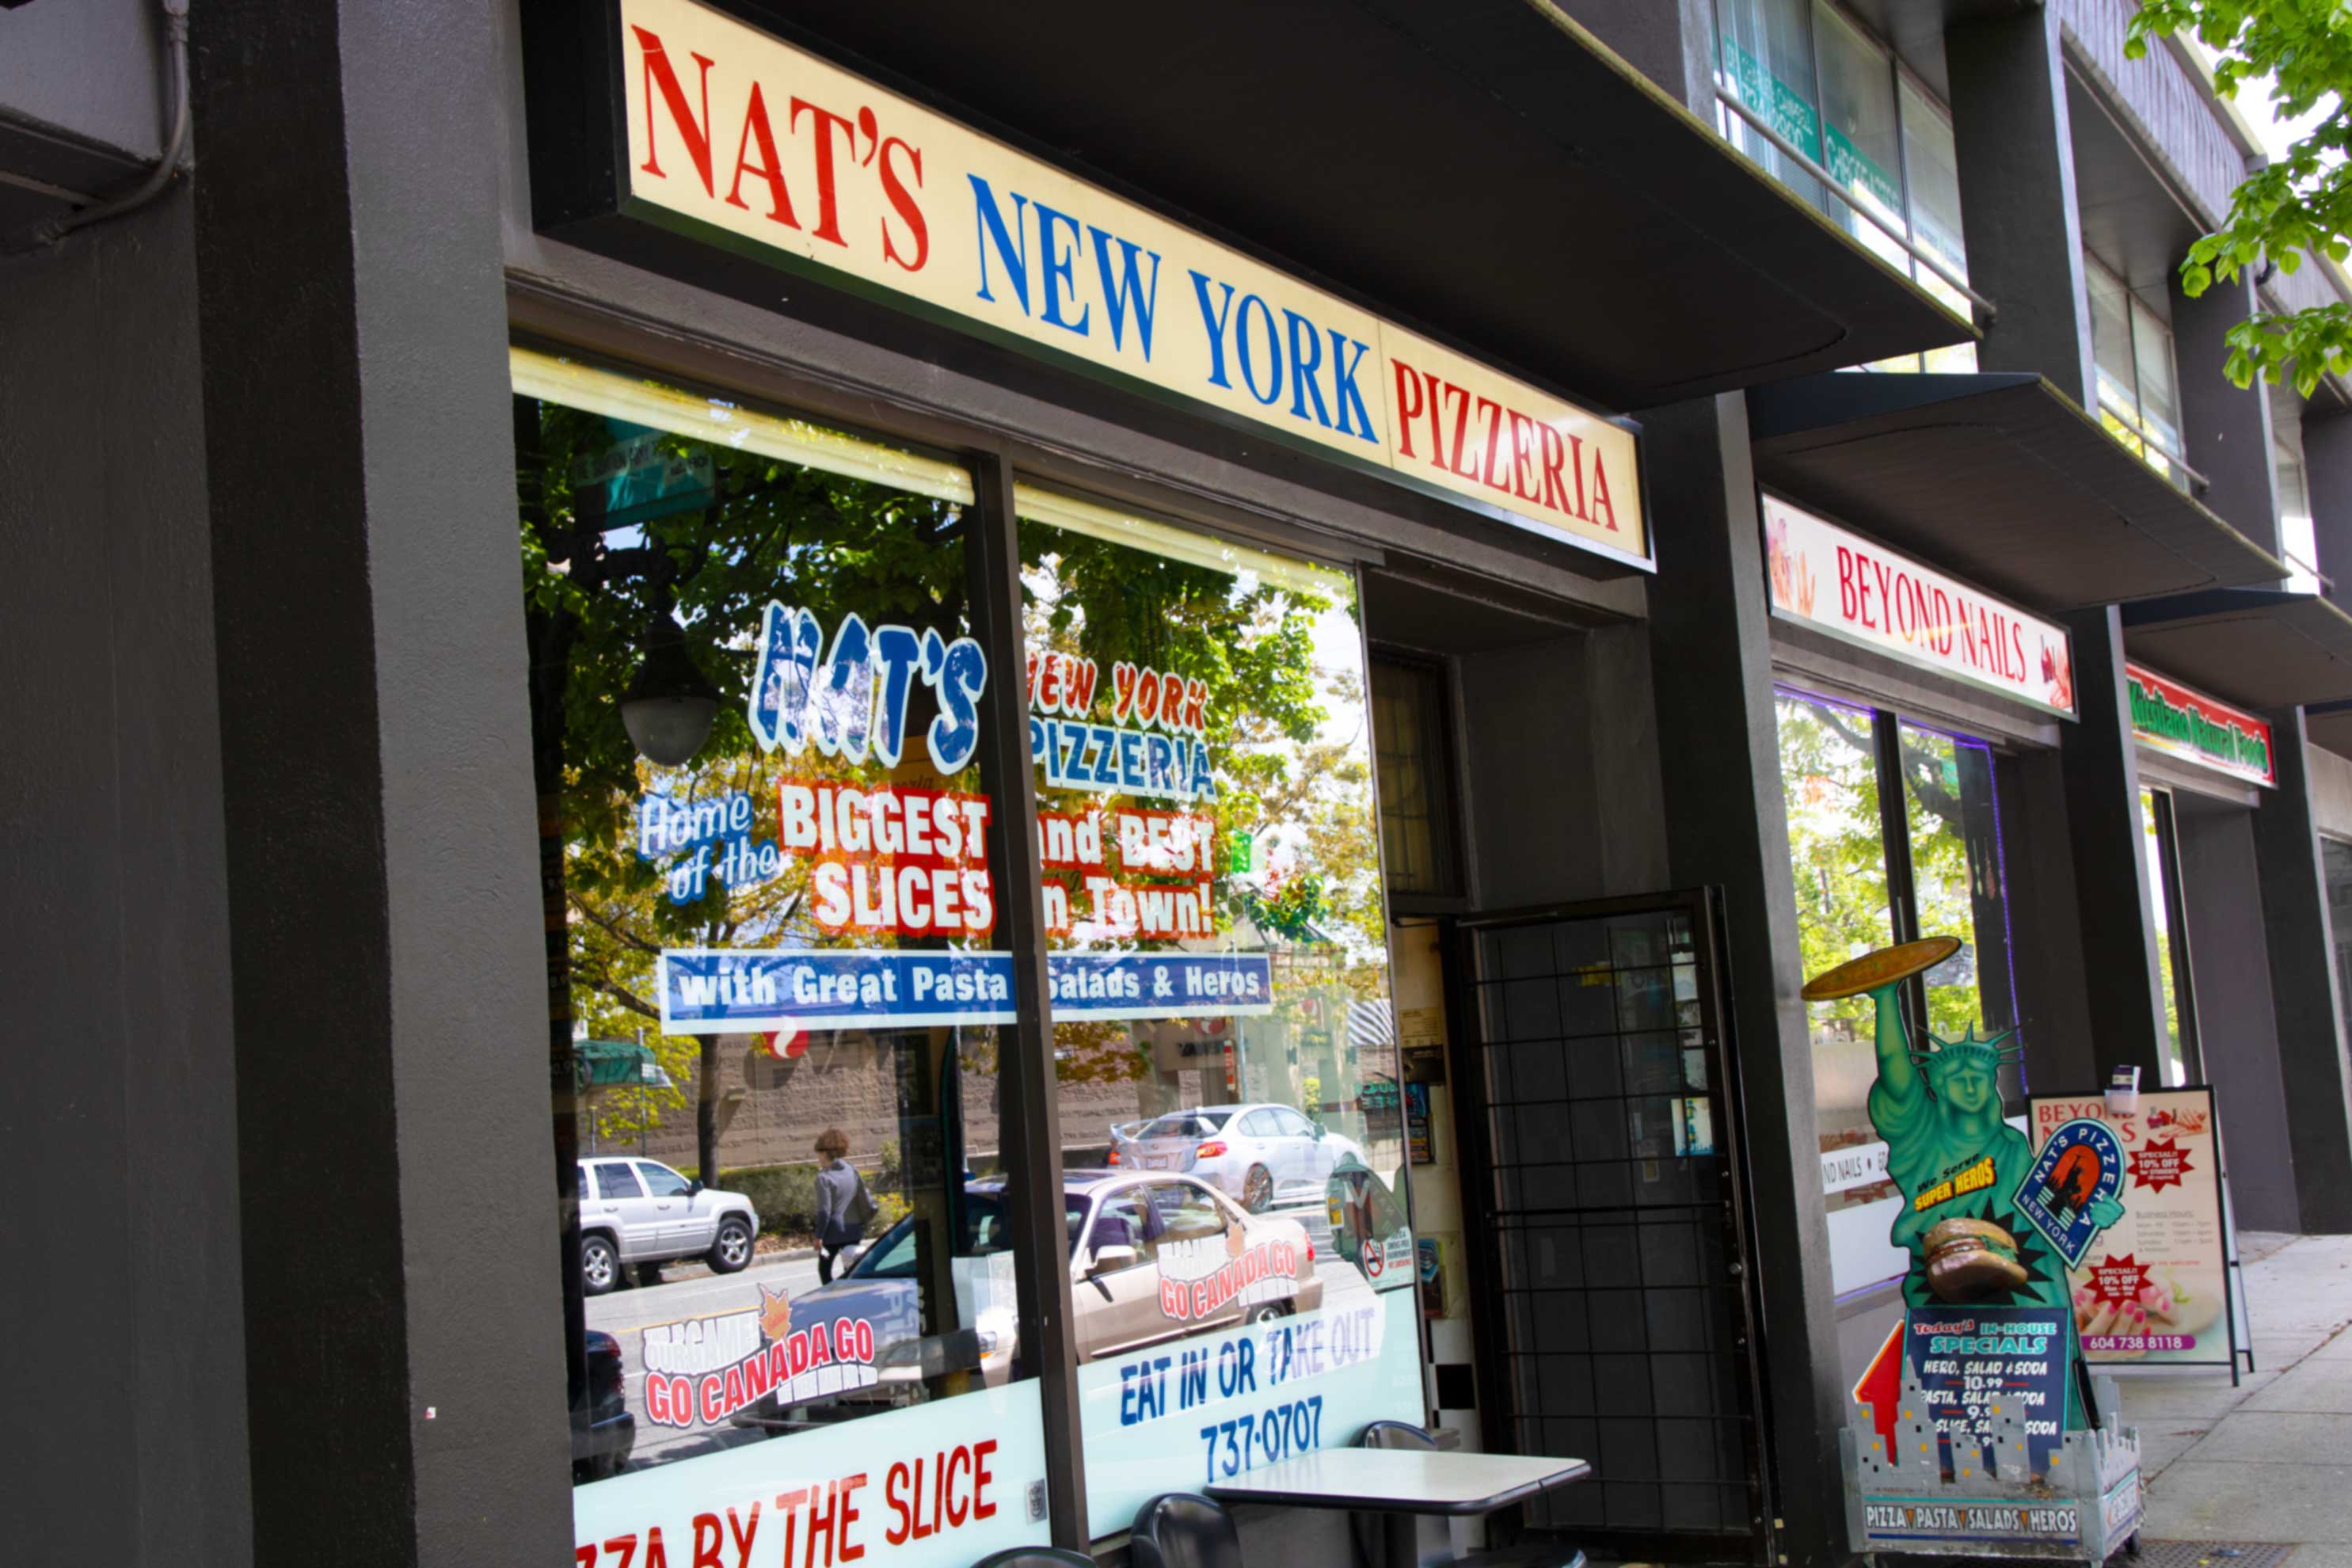 nats new york pizza